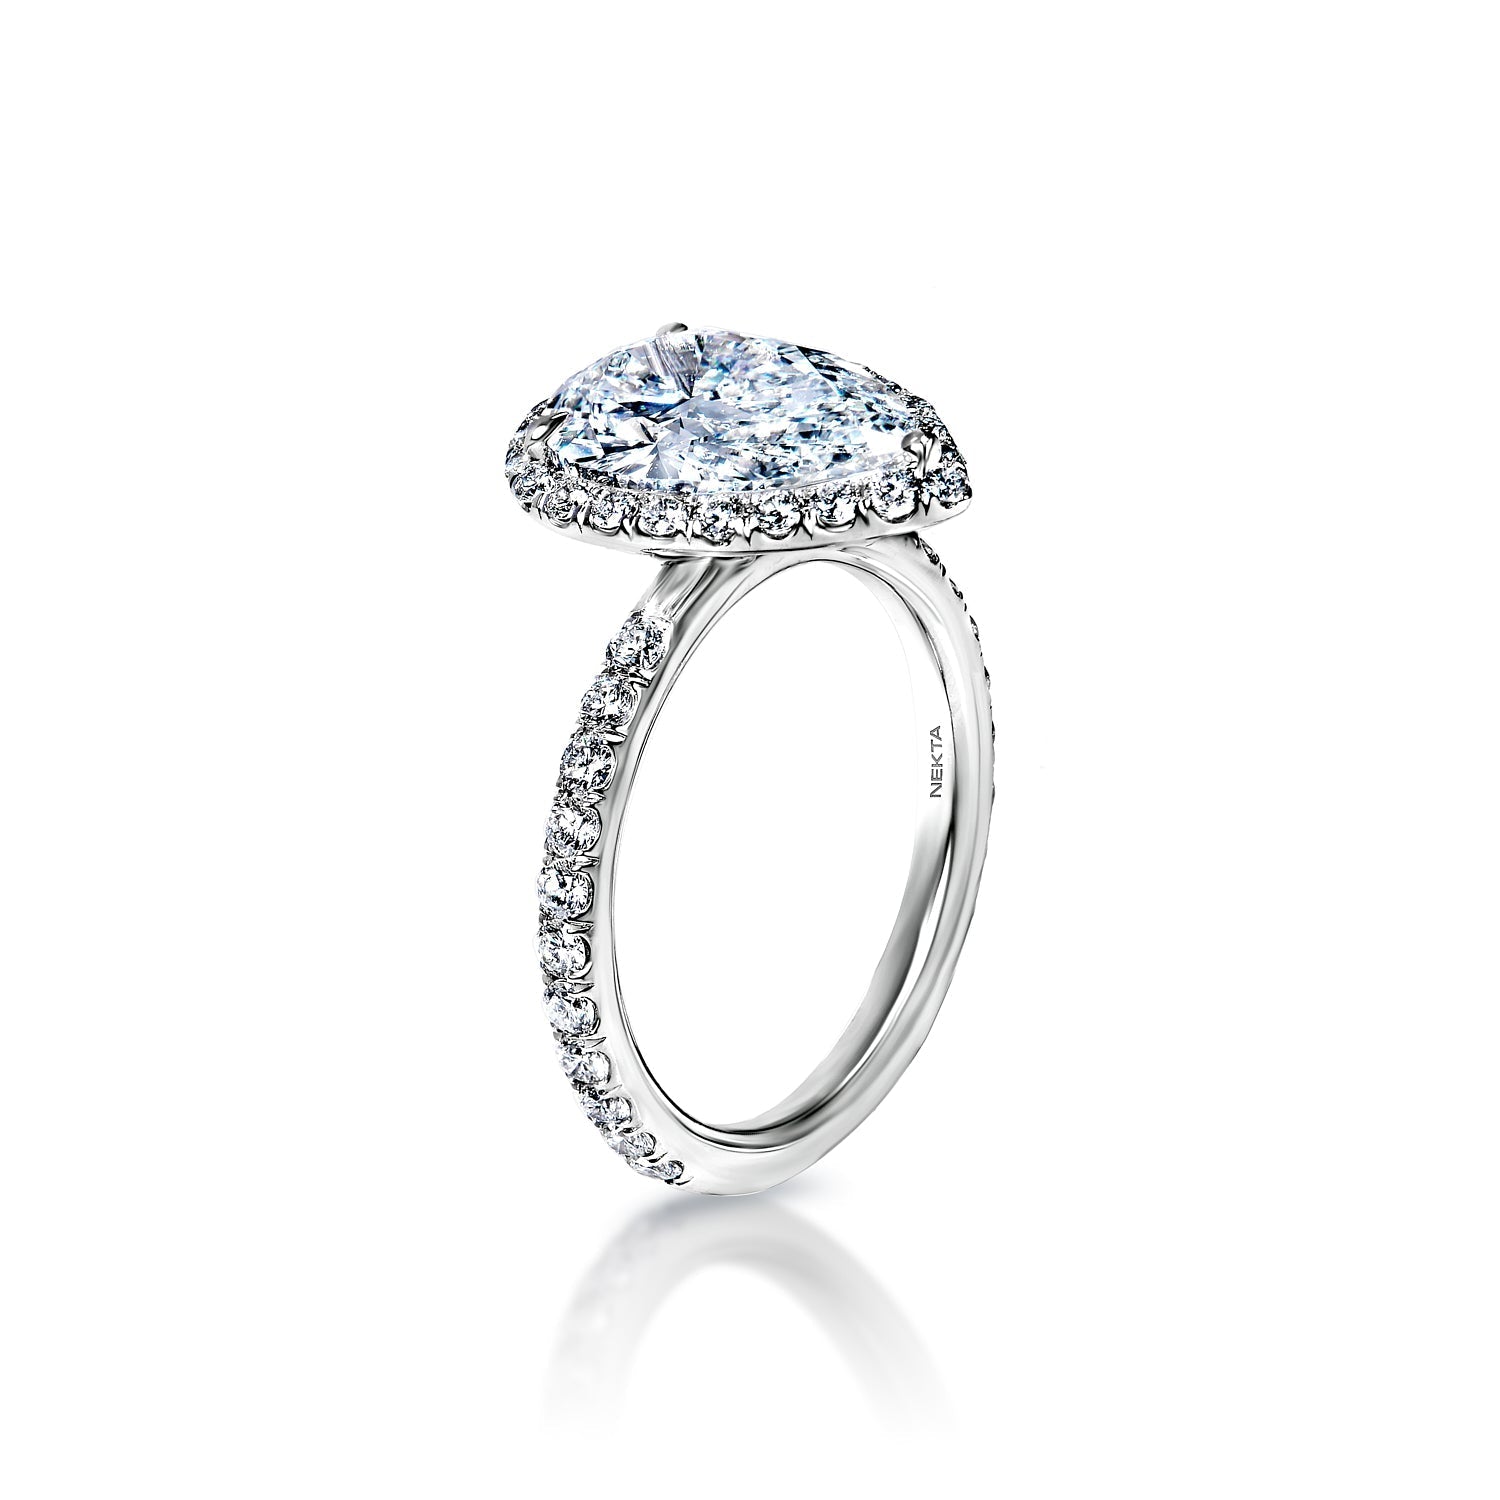 Sunny 4 Carat D VVS2 Pear Shape Diamond Engagement Ring in Platinum By Mike Nekta Side View